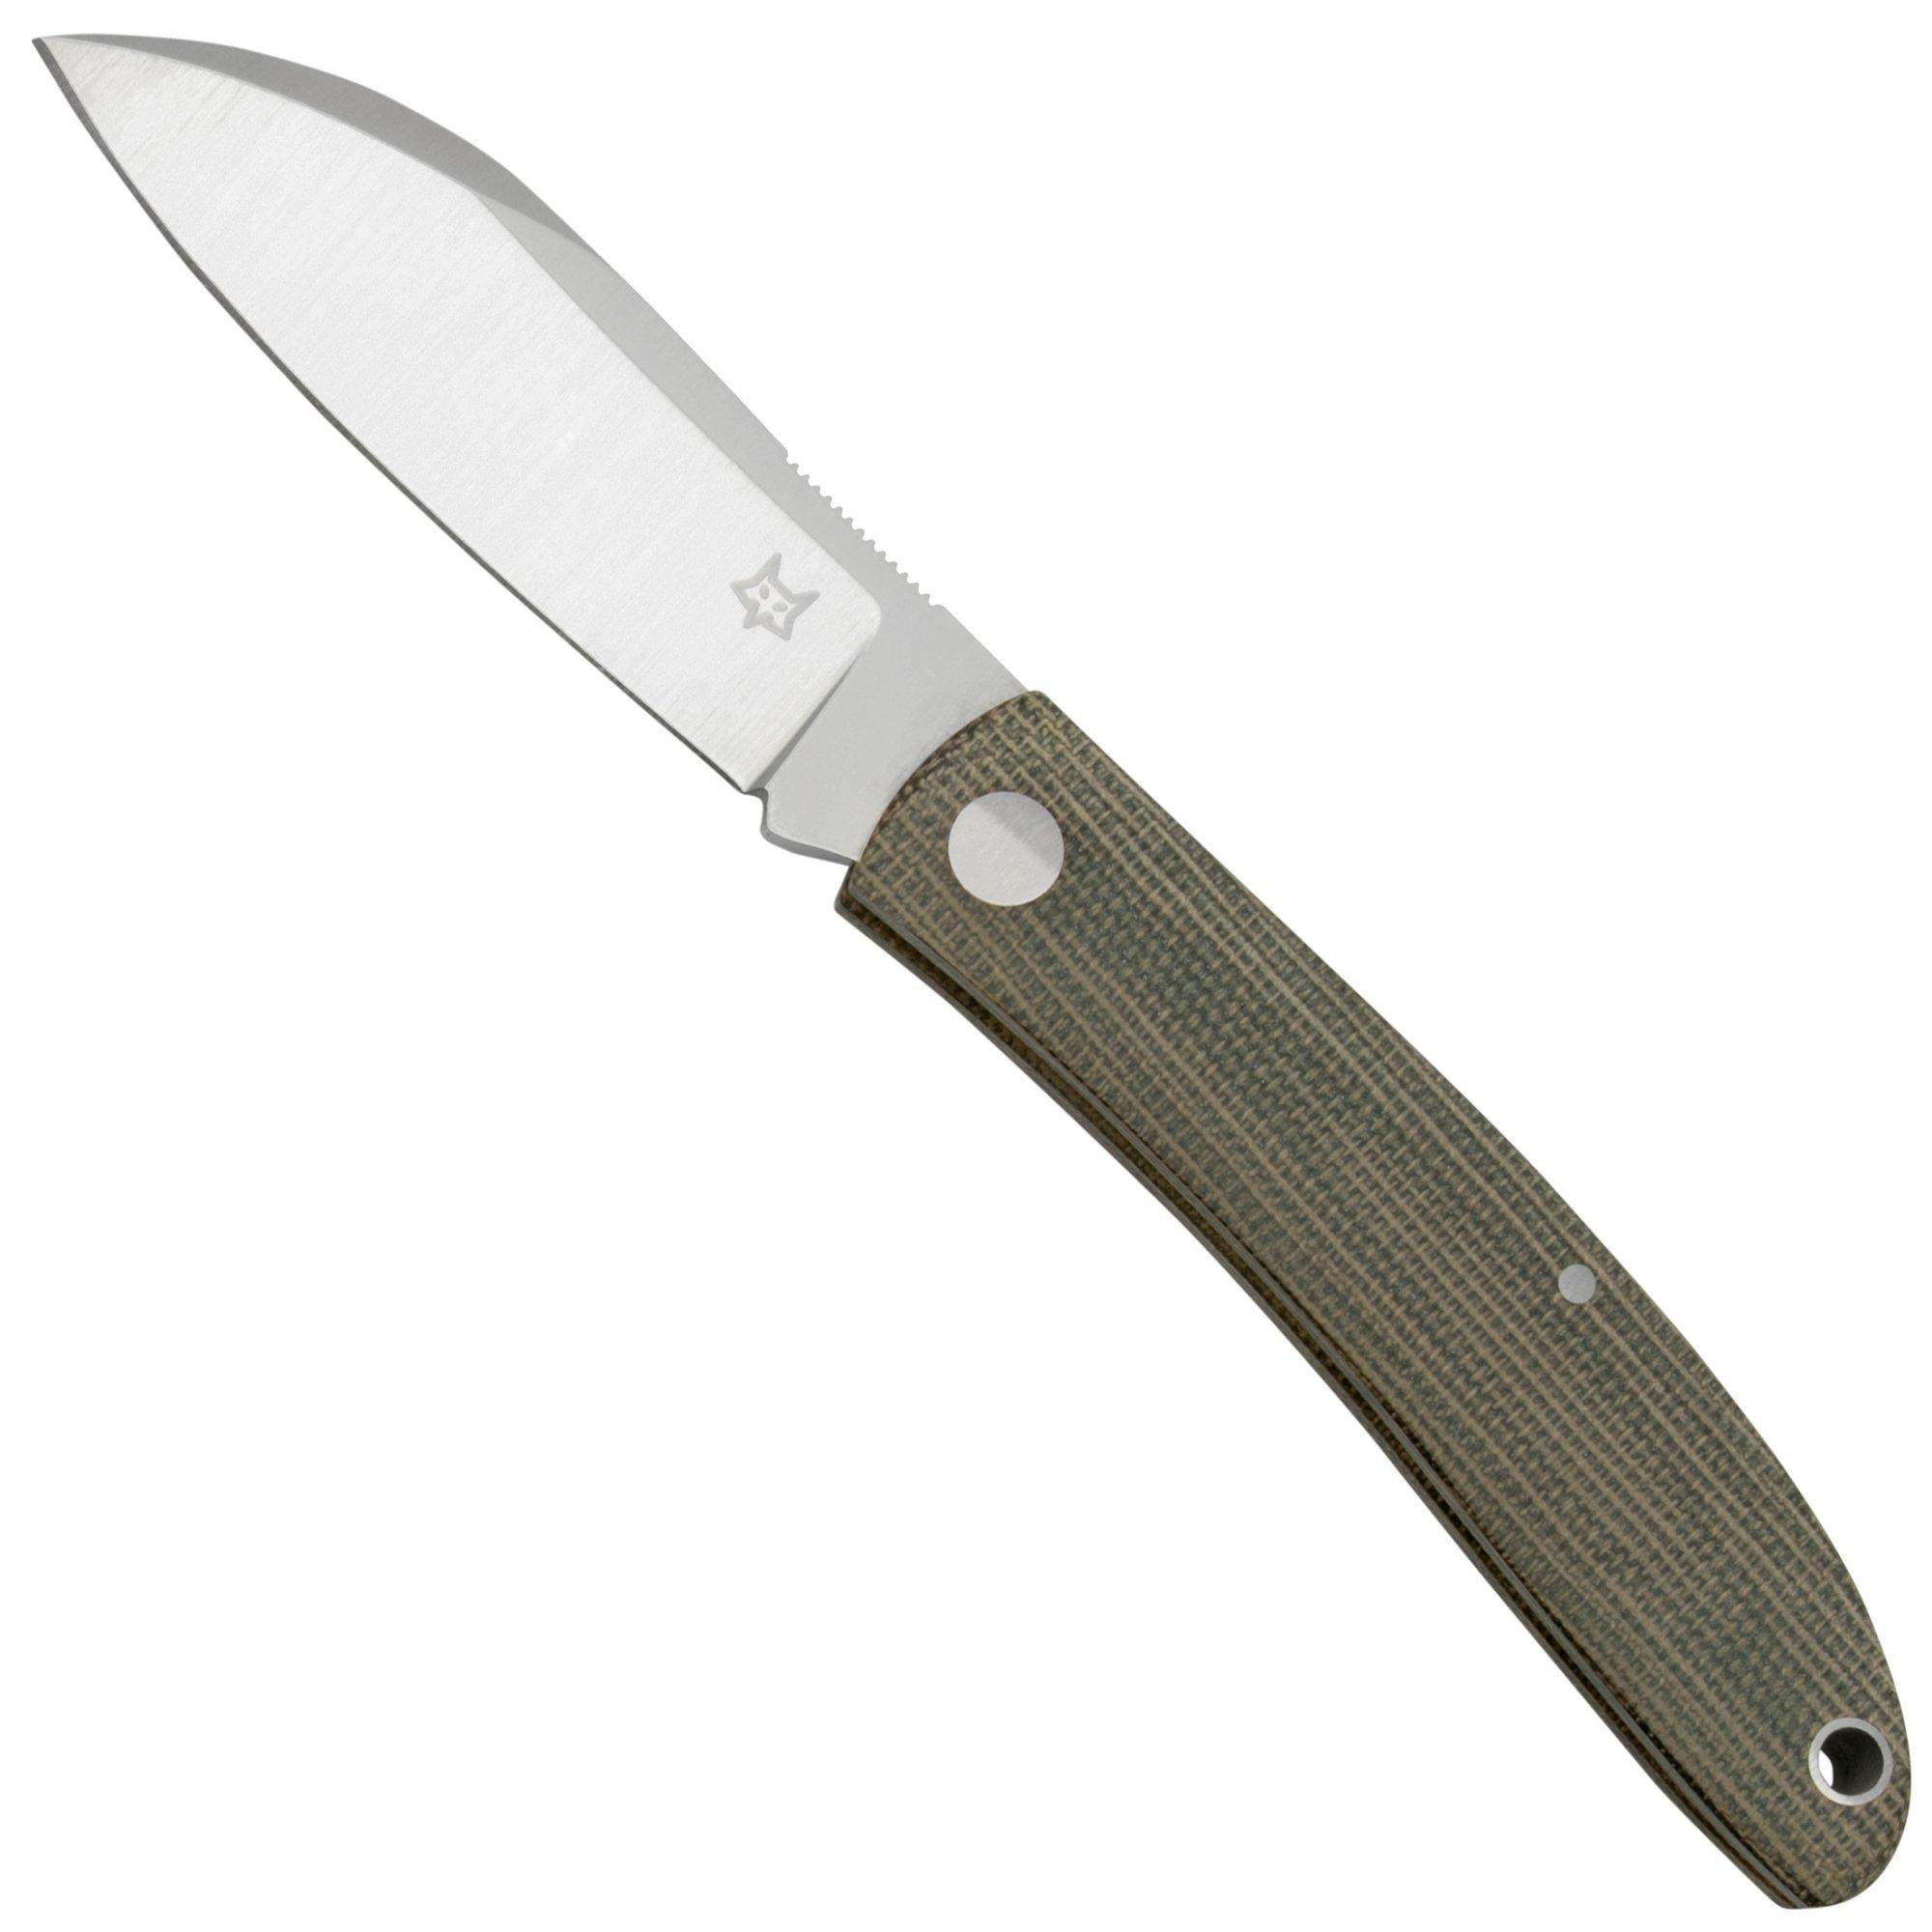 Böker Stockman Rosewood 117162 pocket knife